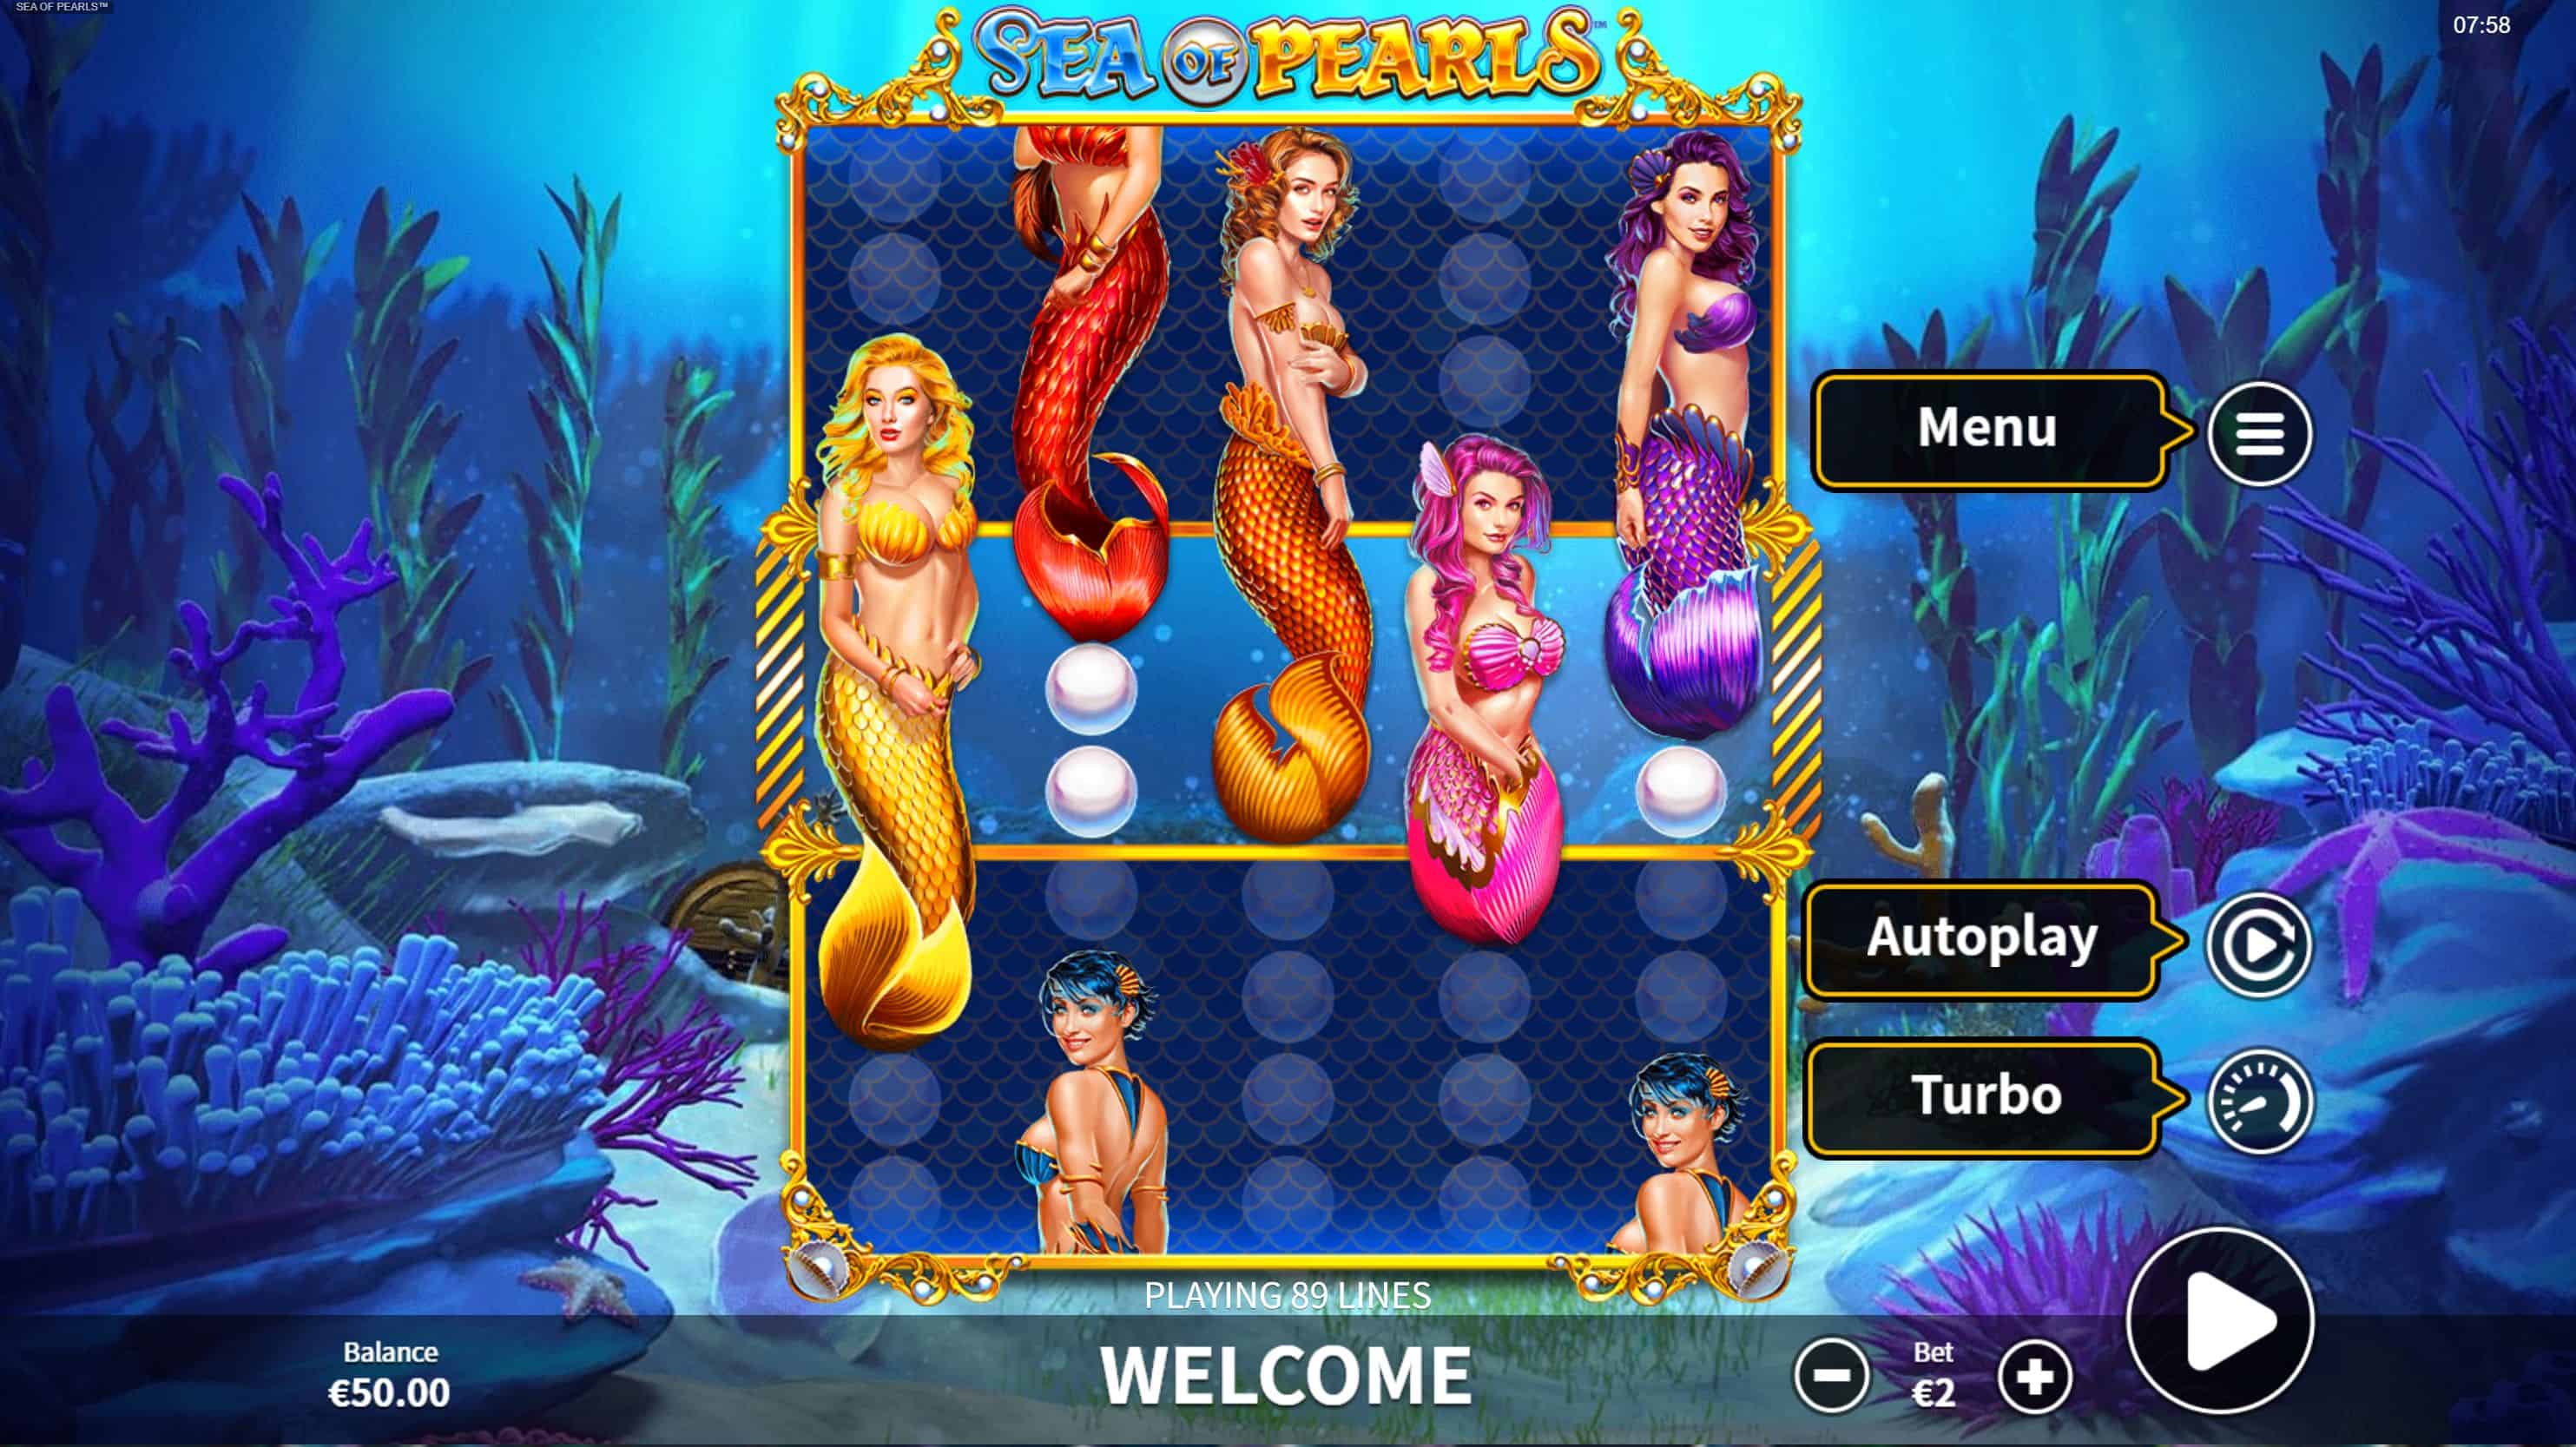 Sea of Pearls Slot Game Free Play at Casino Ireland 01